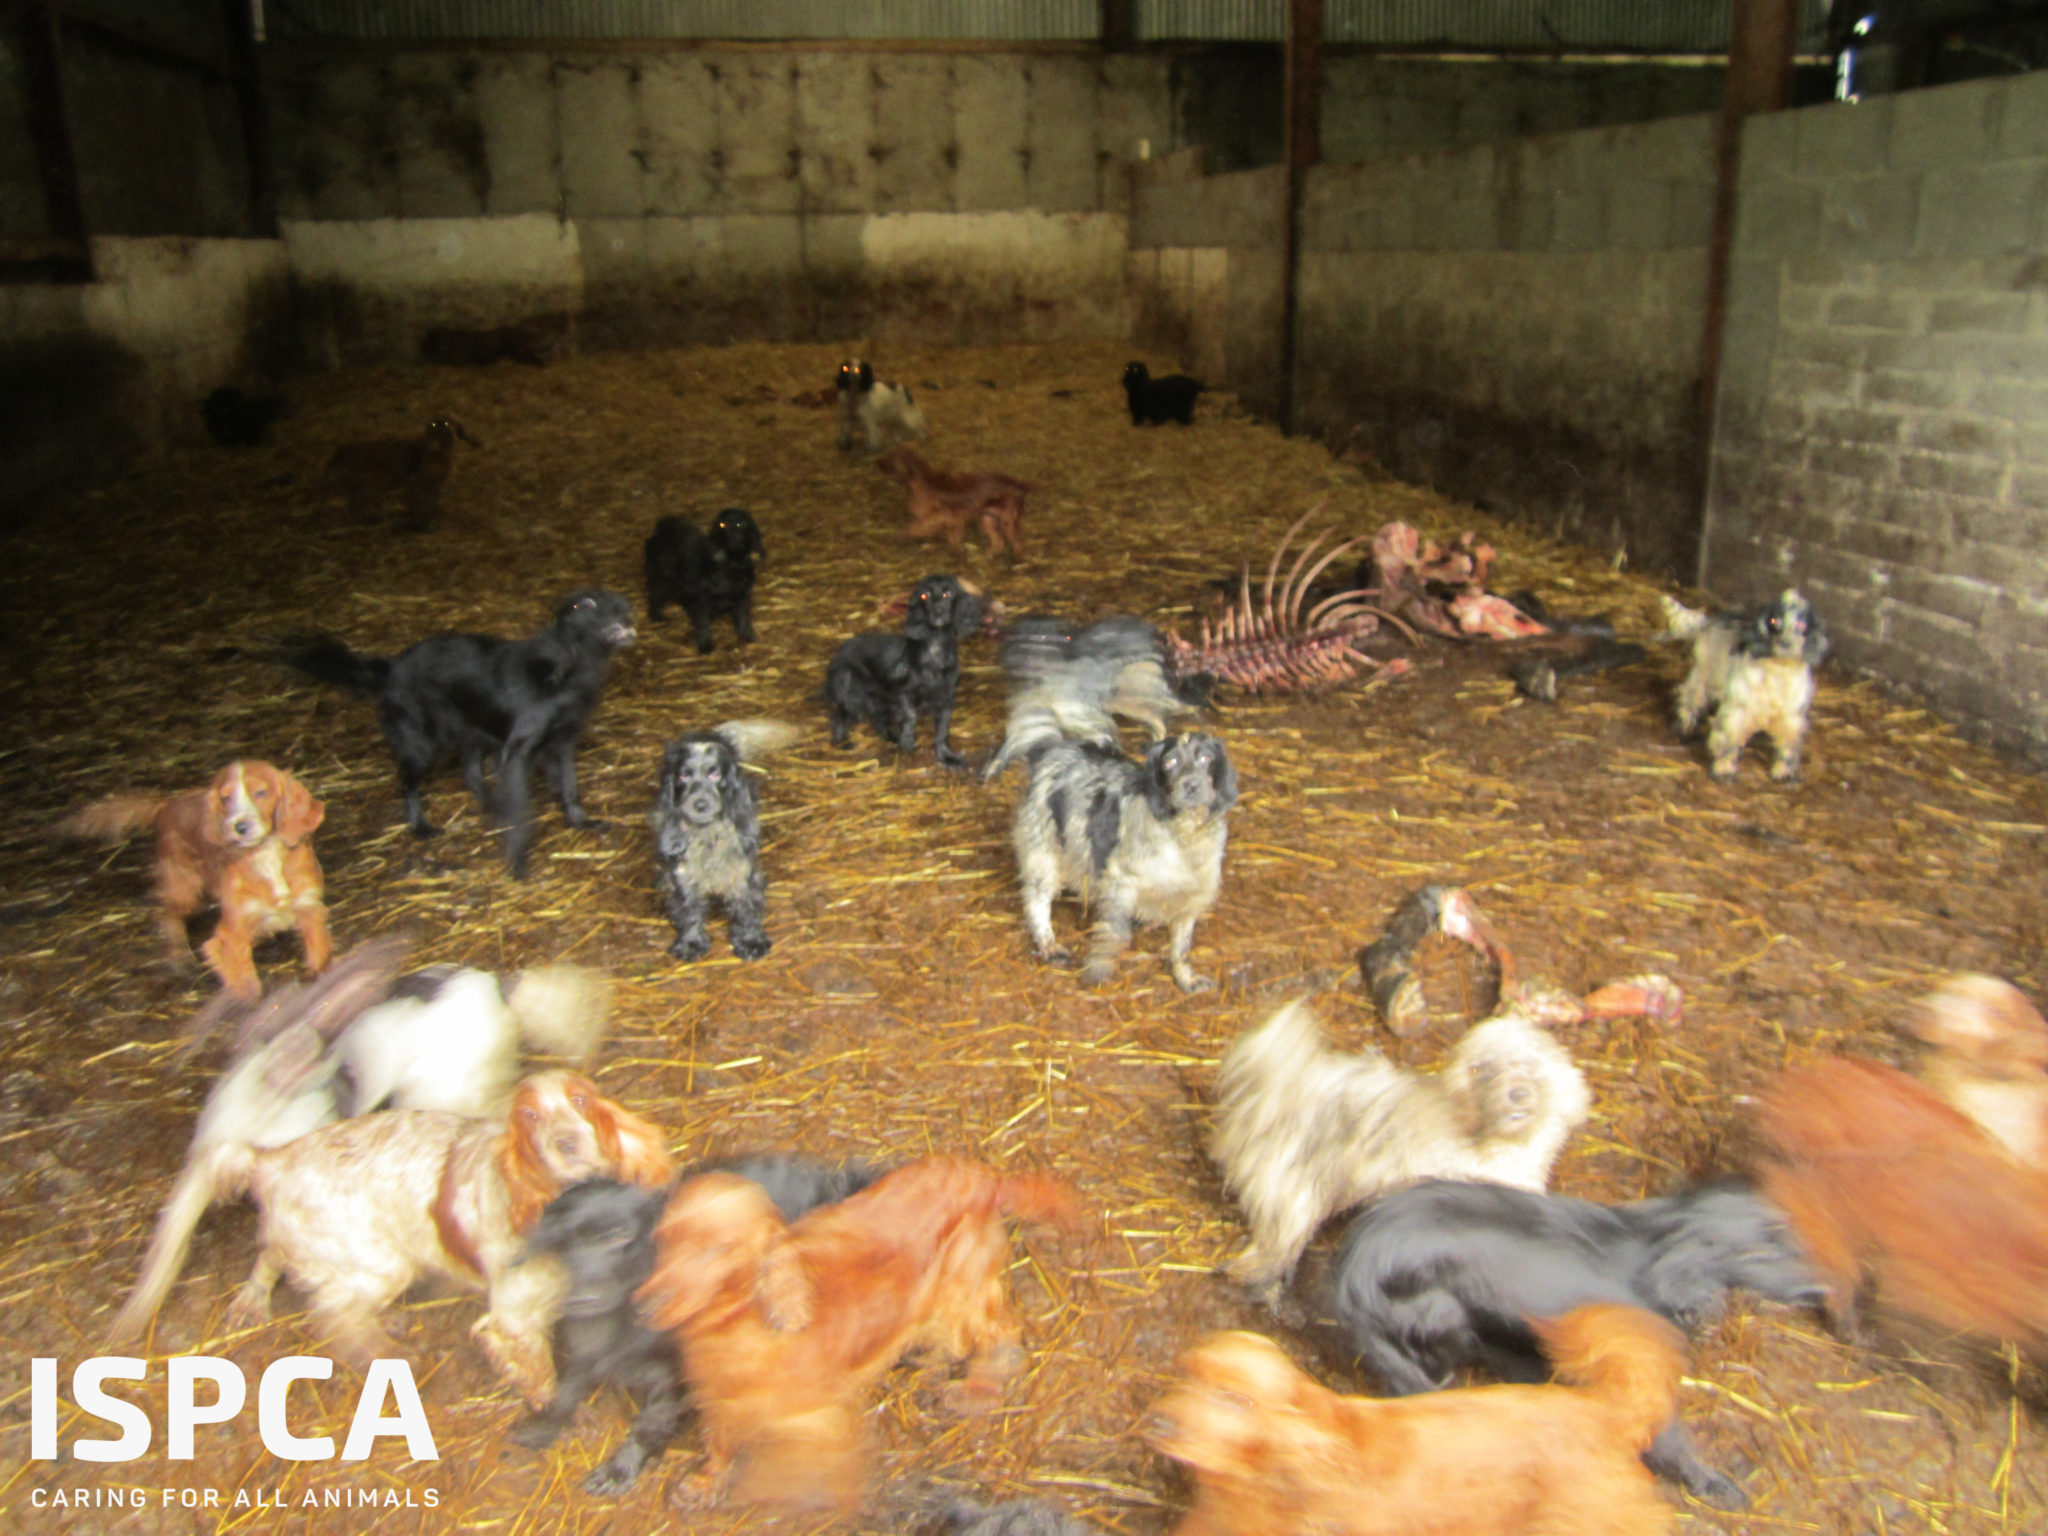 ISPCA animal cruelty